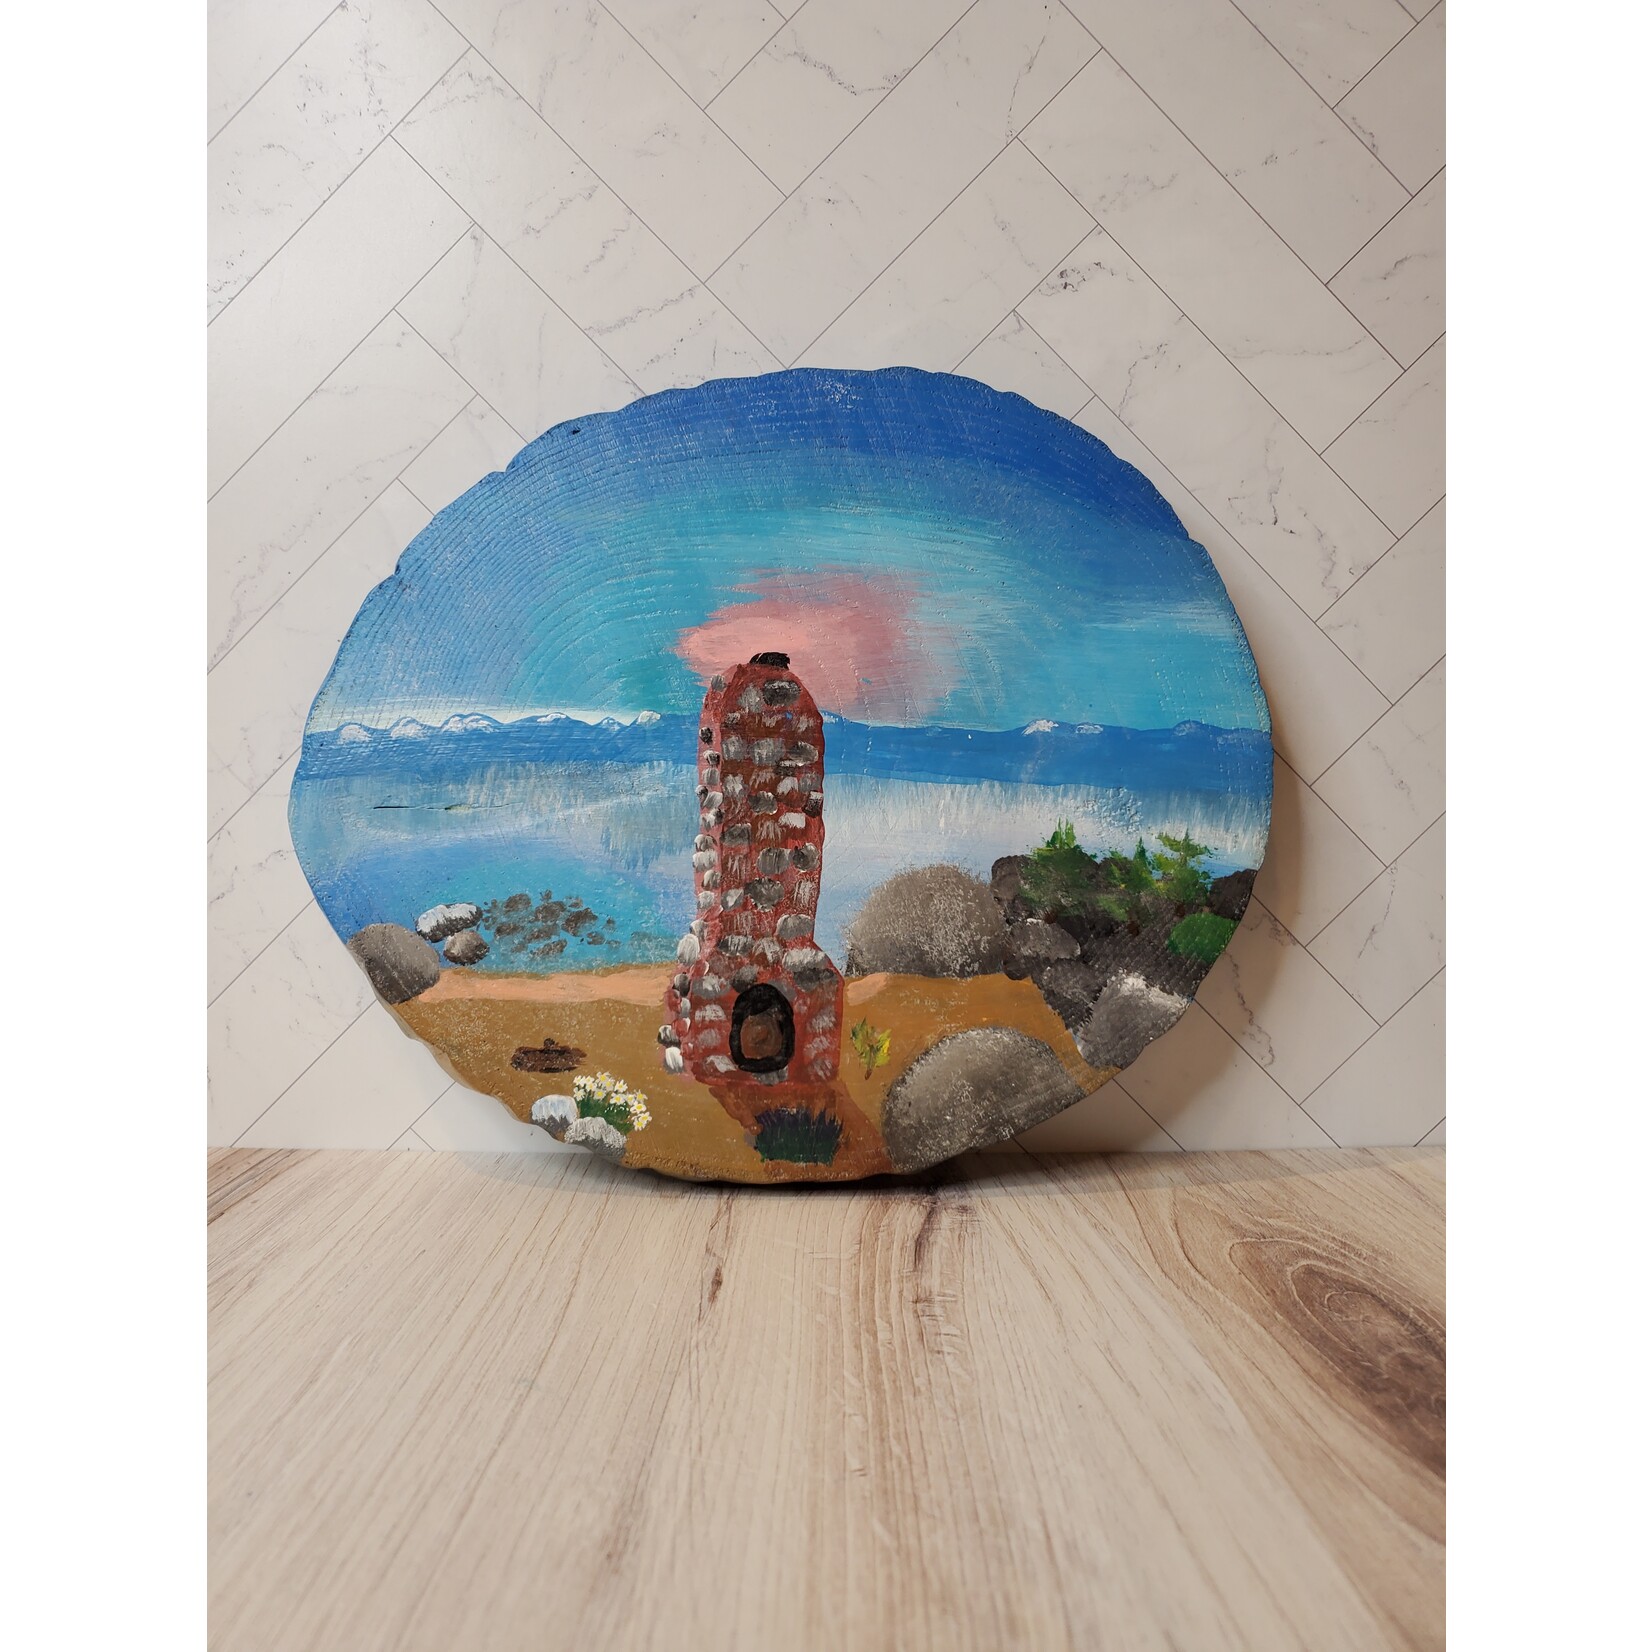 Dean Shreve "Chimney Beach" - original acrylic on wood slice